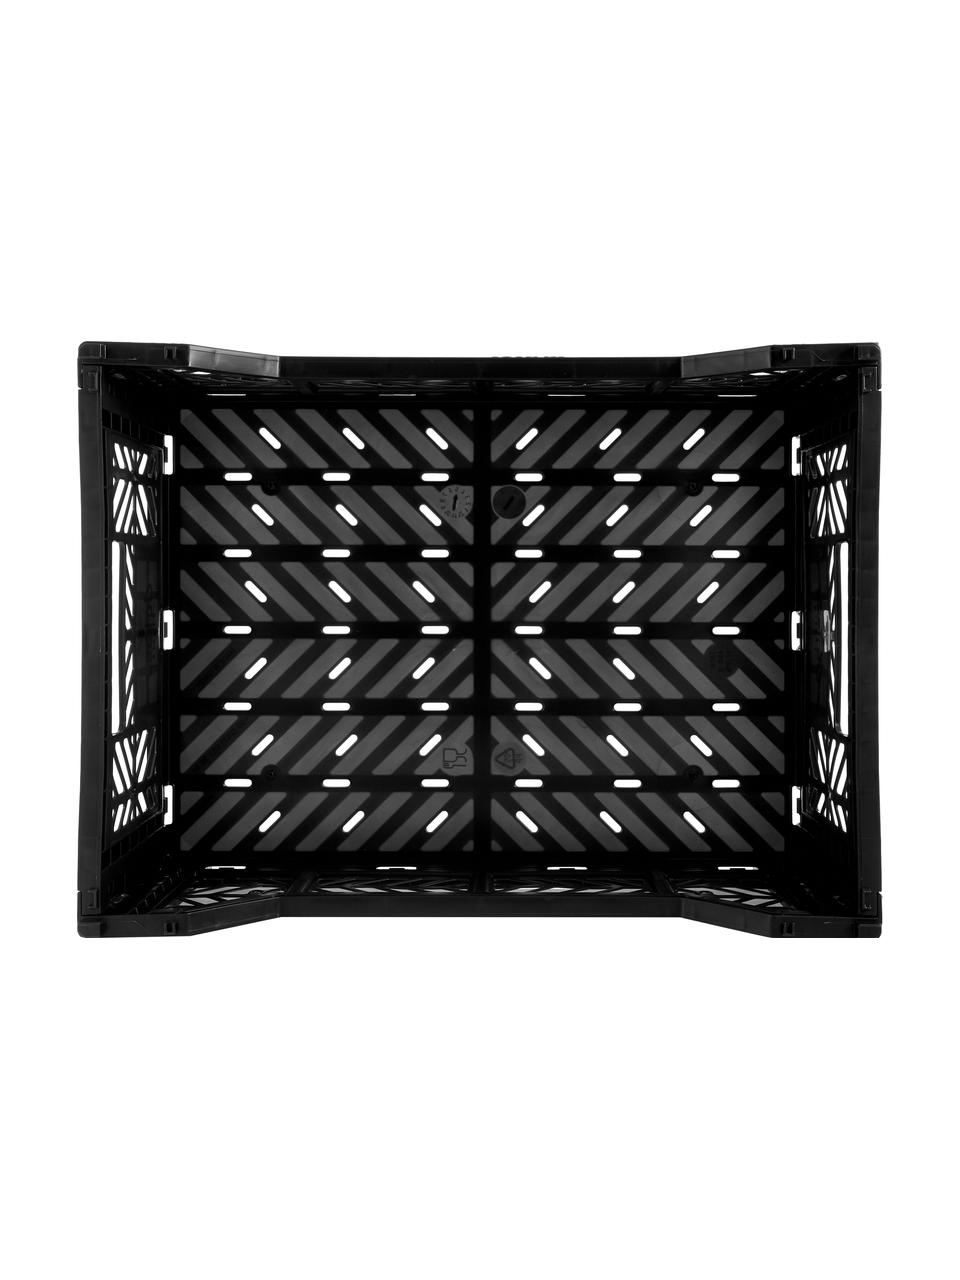 Klappbox Black, Kunststoff, Schwarz, B 40 x H 14 cm